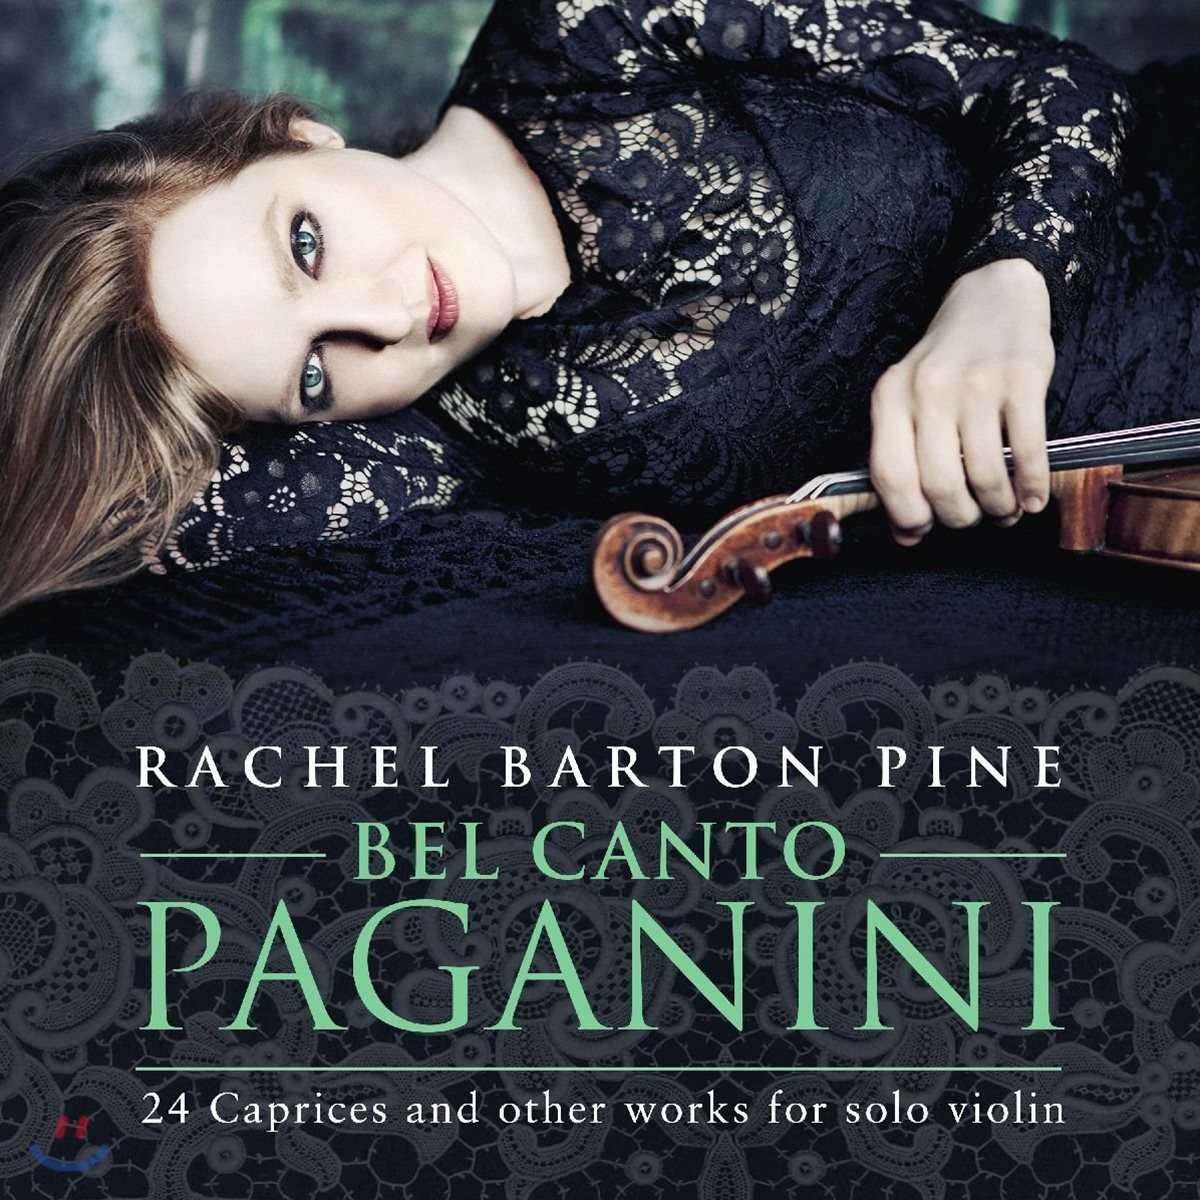 Rachel Barton Pine 벨칸토 파가니니: 무반주 카프리스 Op.1 전곡, 서주와 변주곡, 한사람을 위한 듀엣, 고별의 카프리스 외 - 레이첼 바튼 파인 (Bel Canto Paganini: 24 Caprices, Caprice d'Adieu)